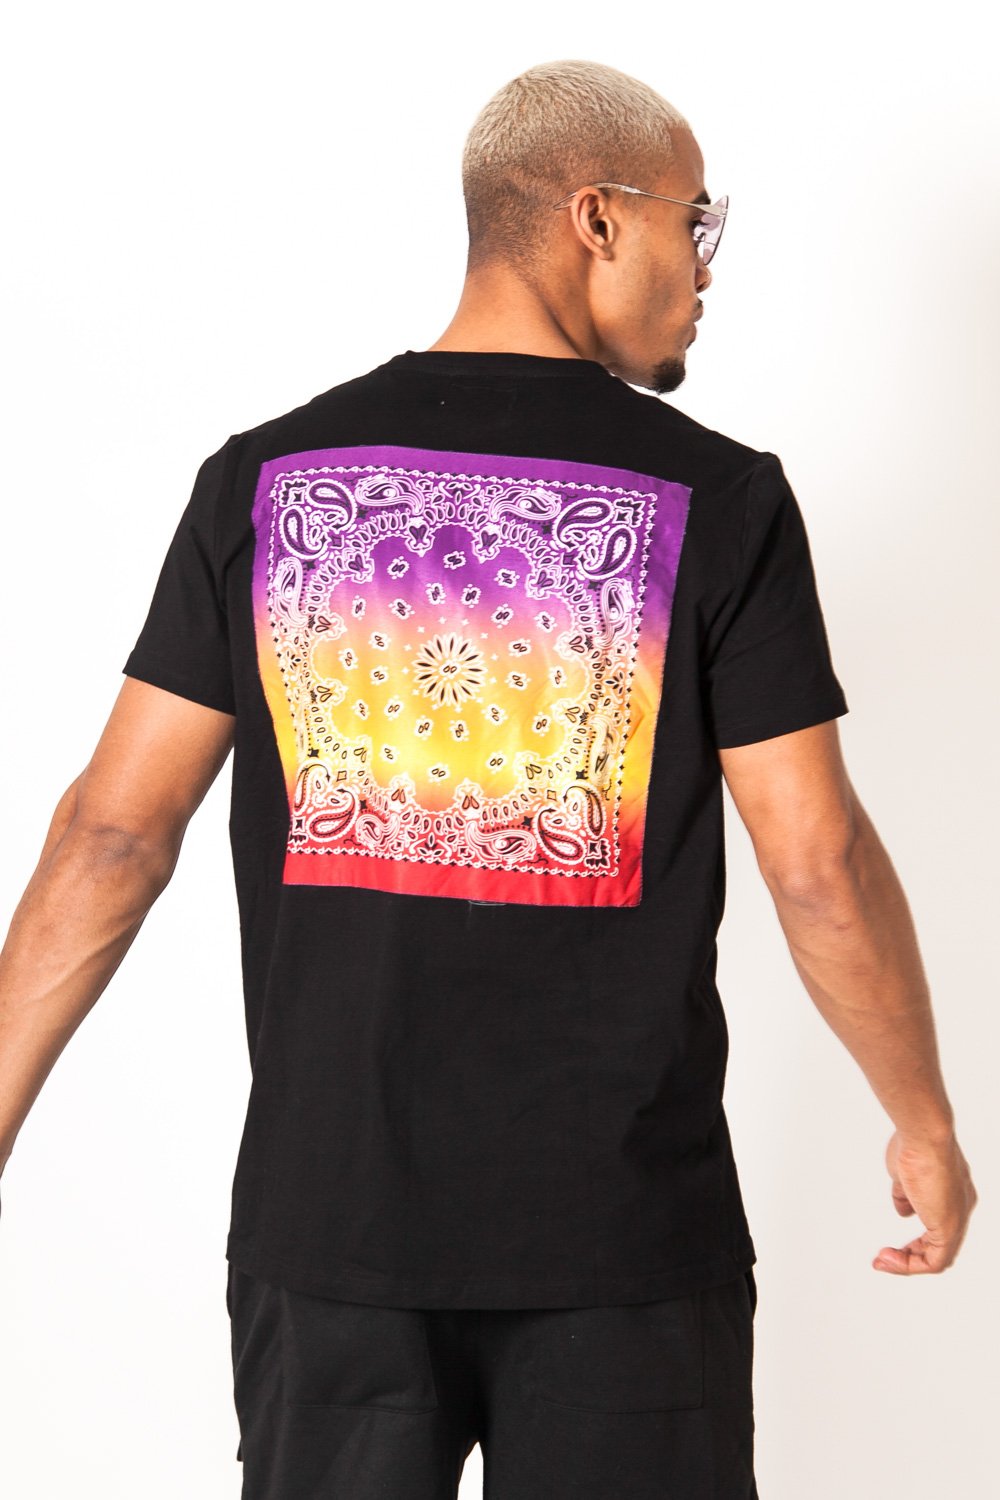 Bandana multicolored t-shirt black